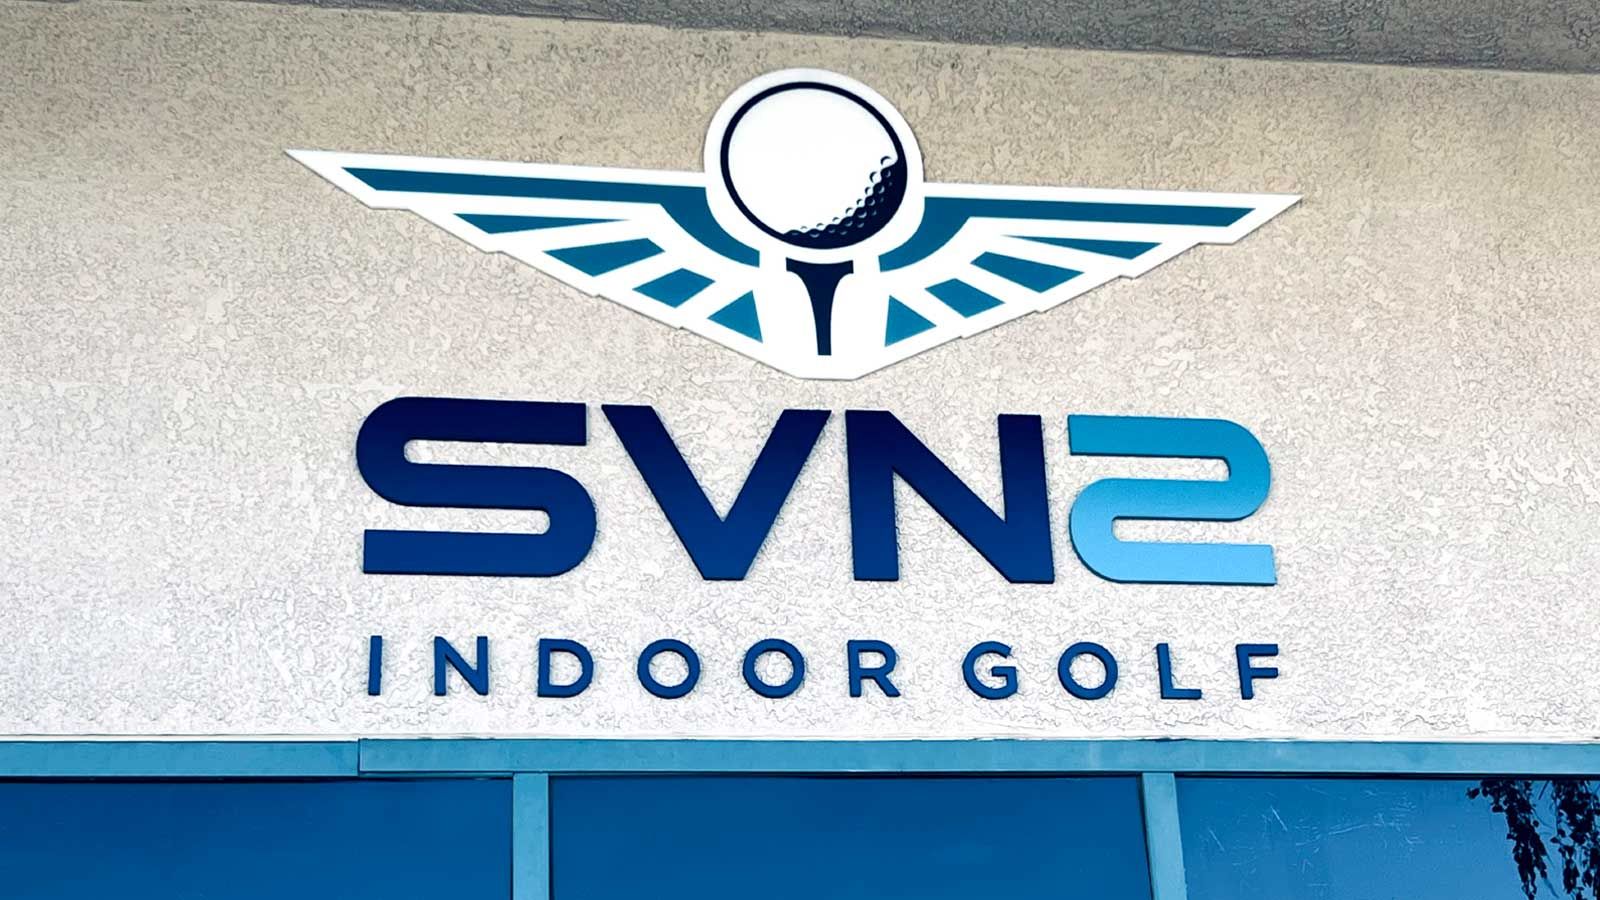 SVN2 Indoor Golf building sign